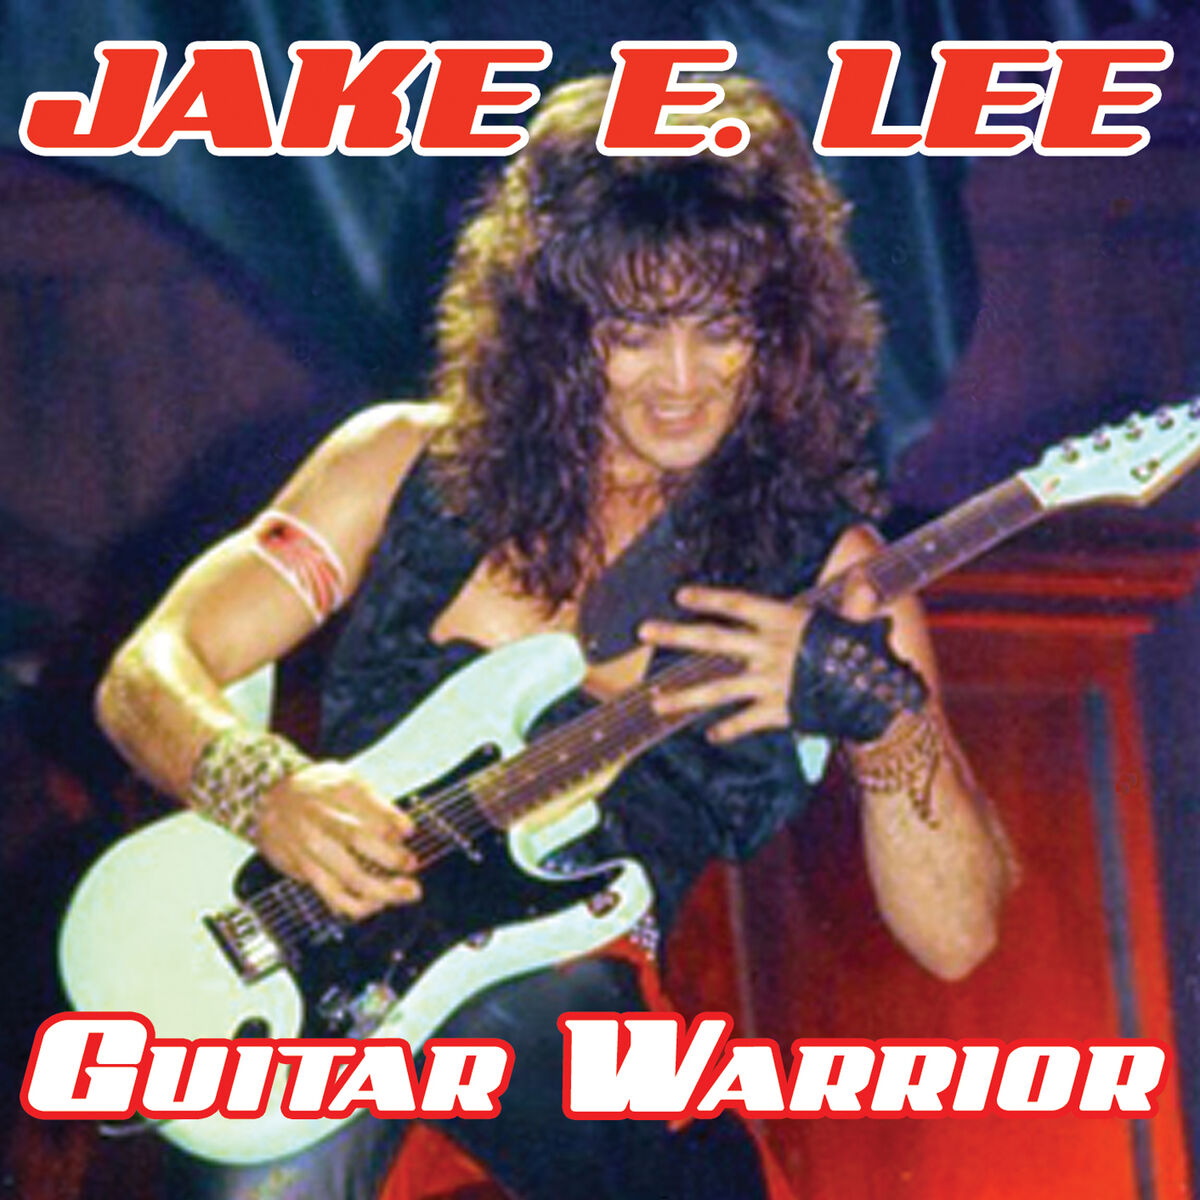 Jake E. Lee: albums, songs, playlists | Listen on Deezer